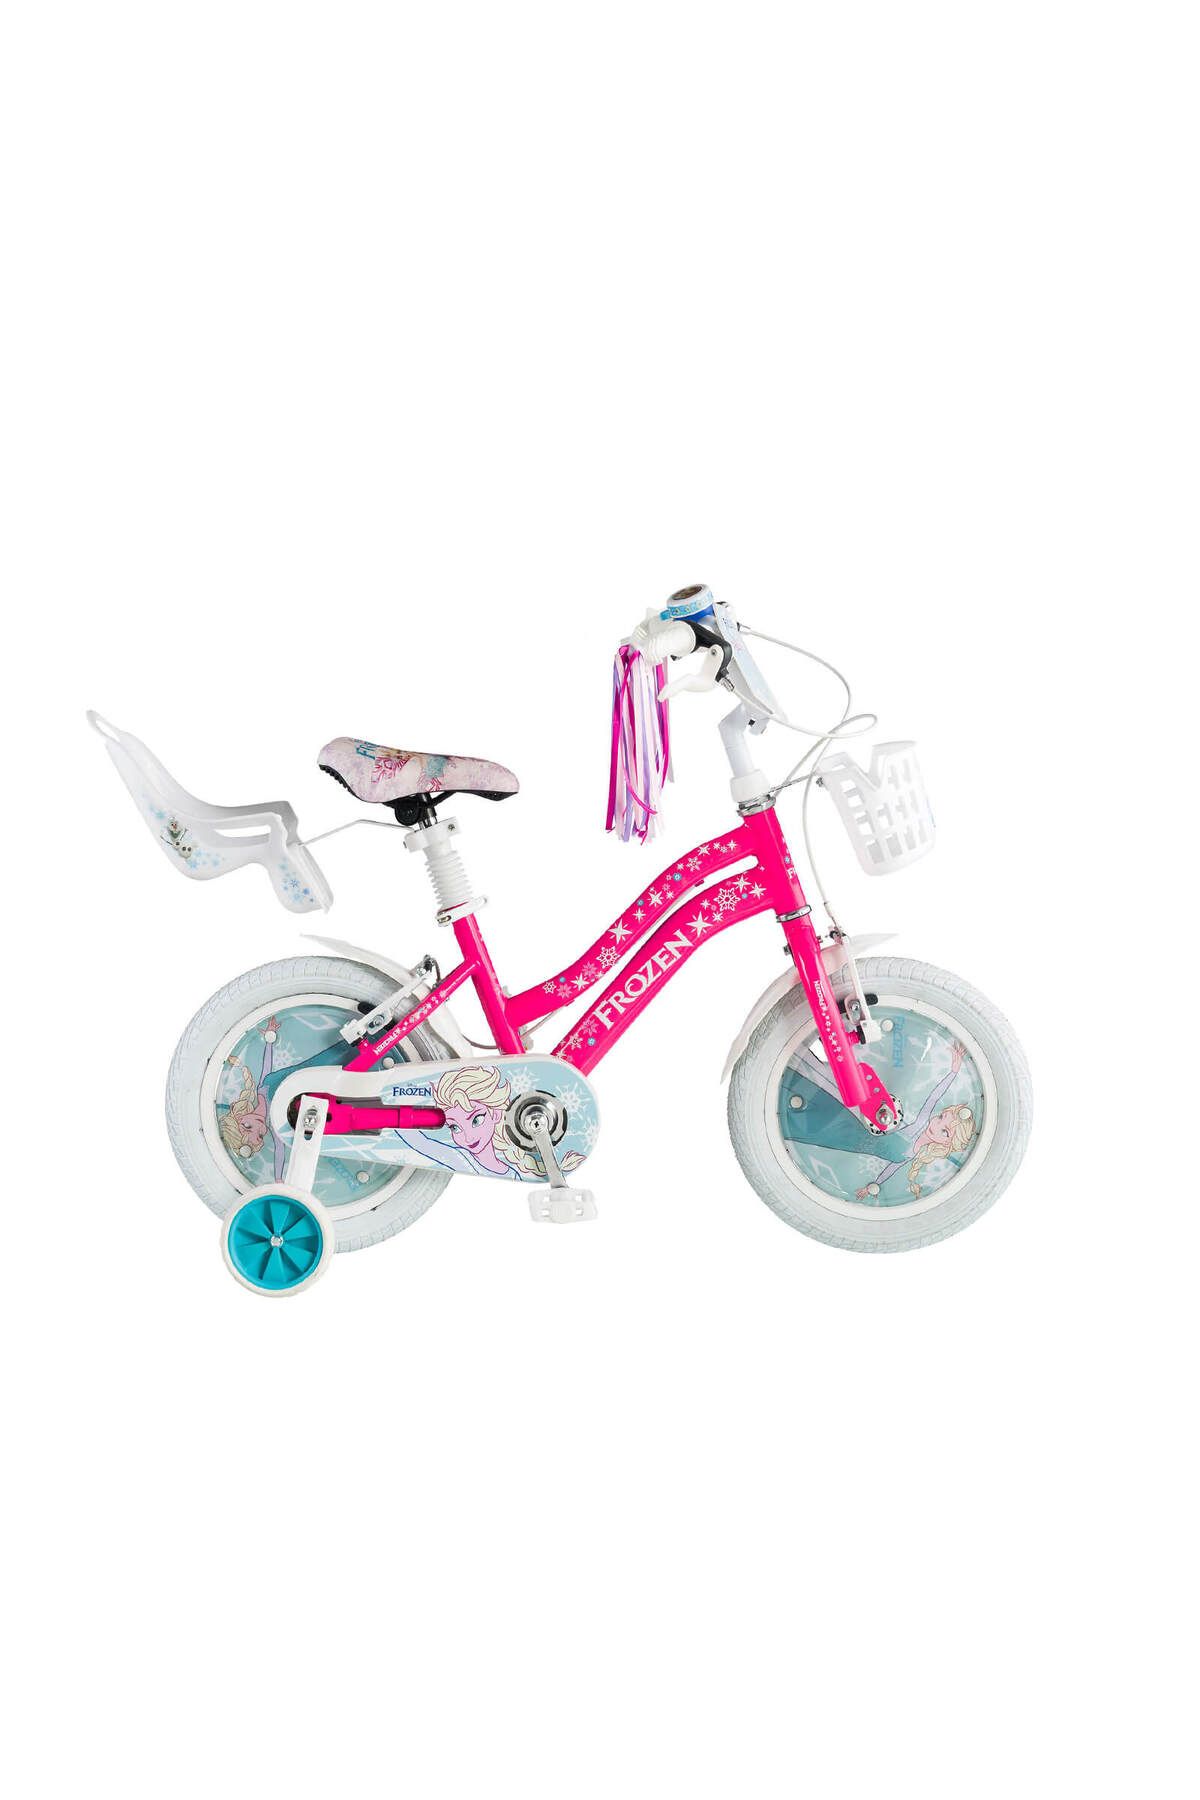 Kron Frozen 14 Jant Kız Çocuk Bisikleti